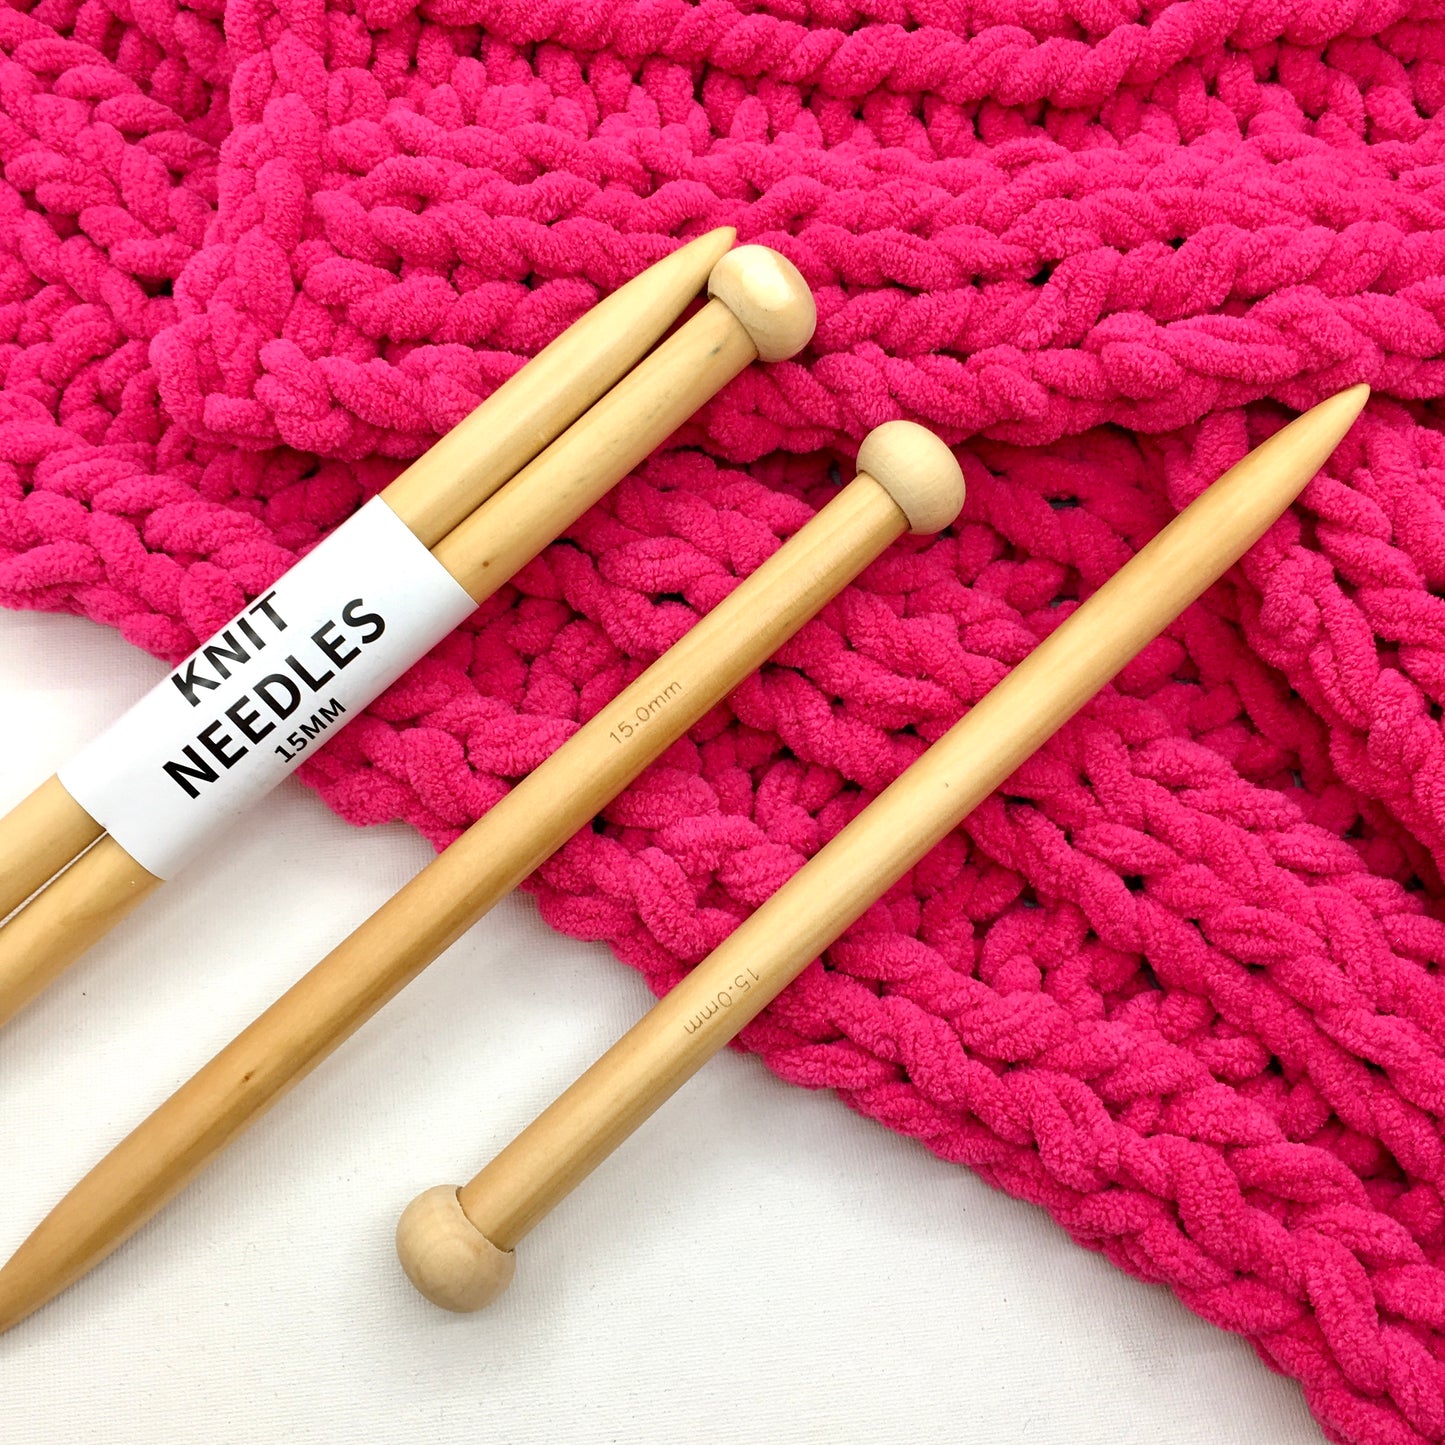 15mm short knitting needles | beech wood knitting needles